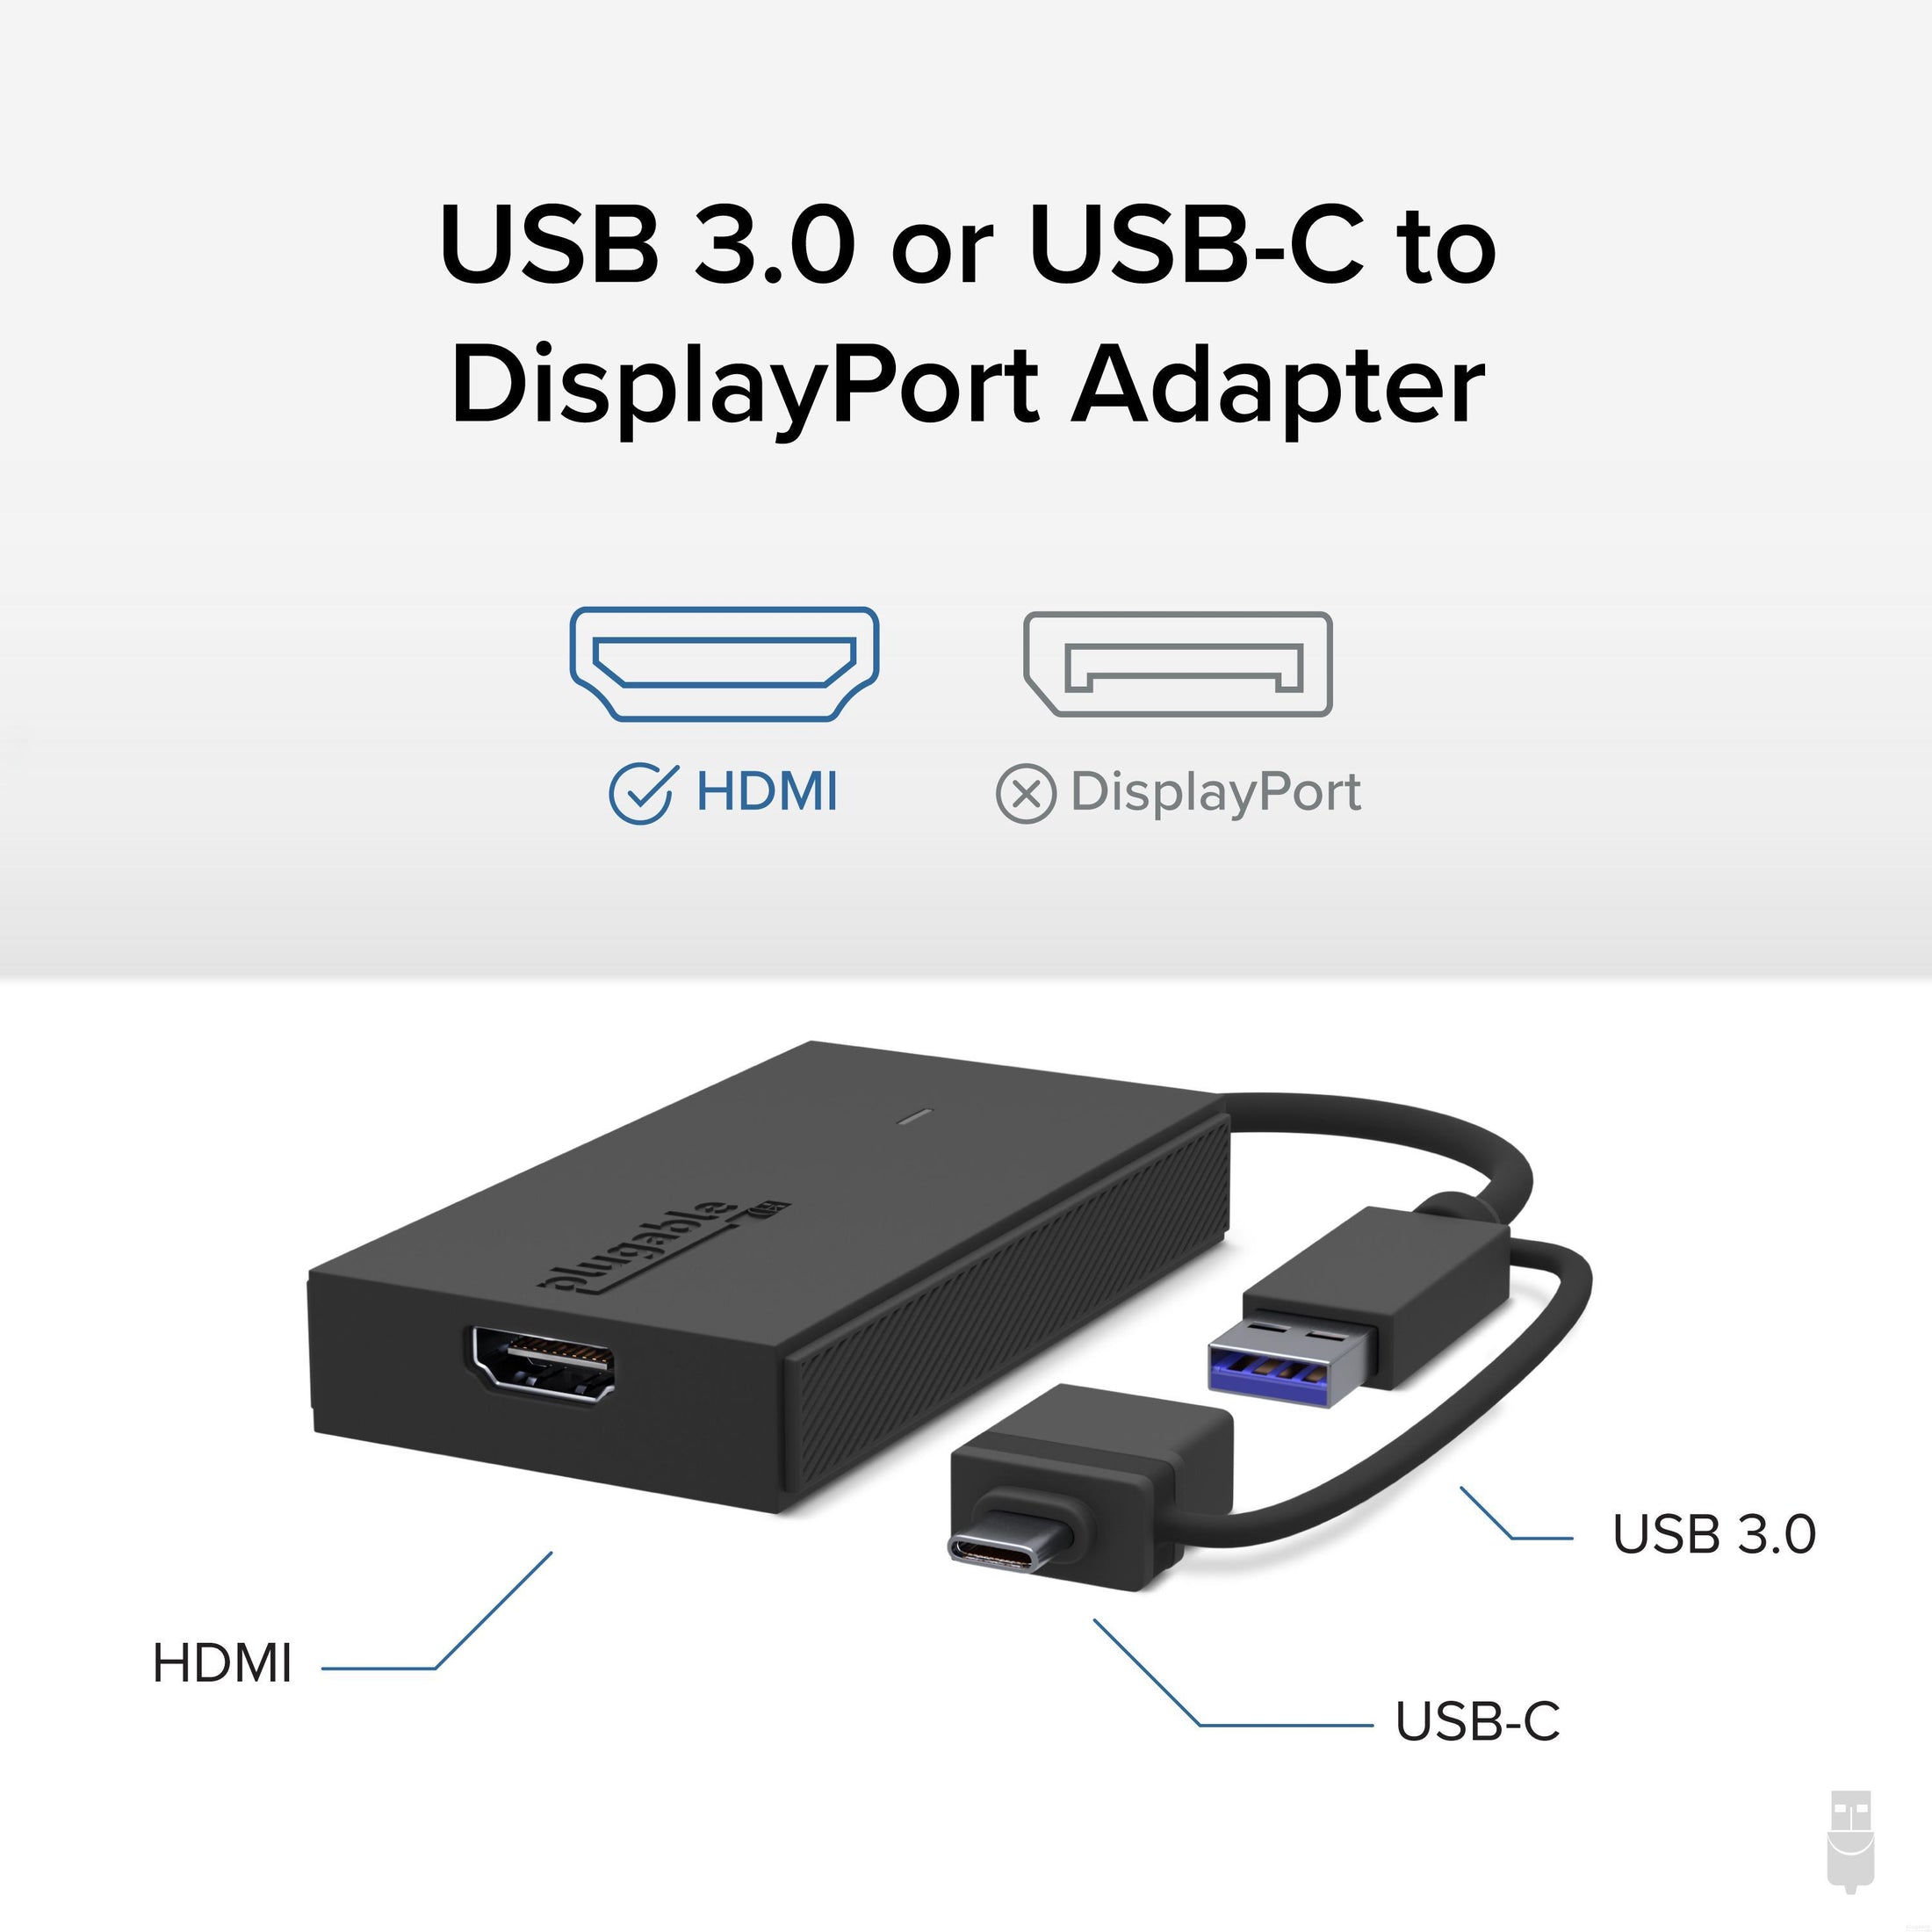 Plugable USB-C or USB 3.0 to HDMI Adapter – Plugable Technologies